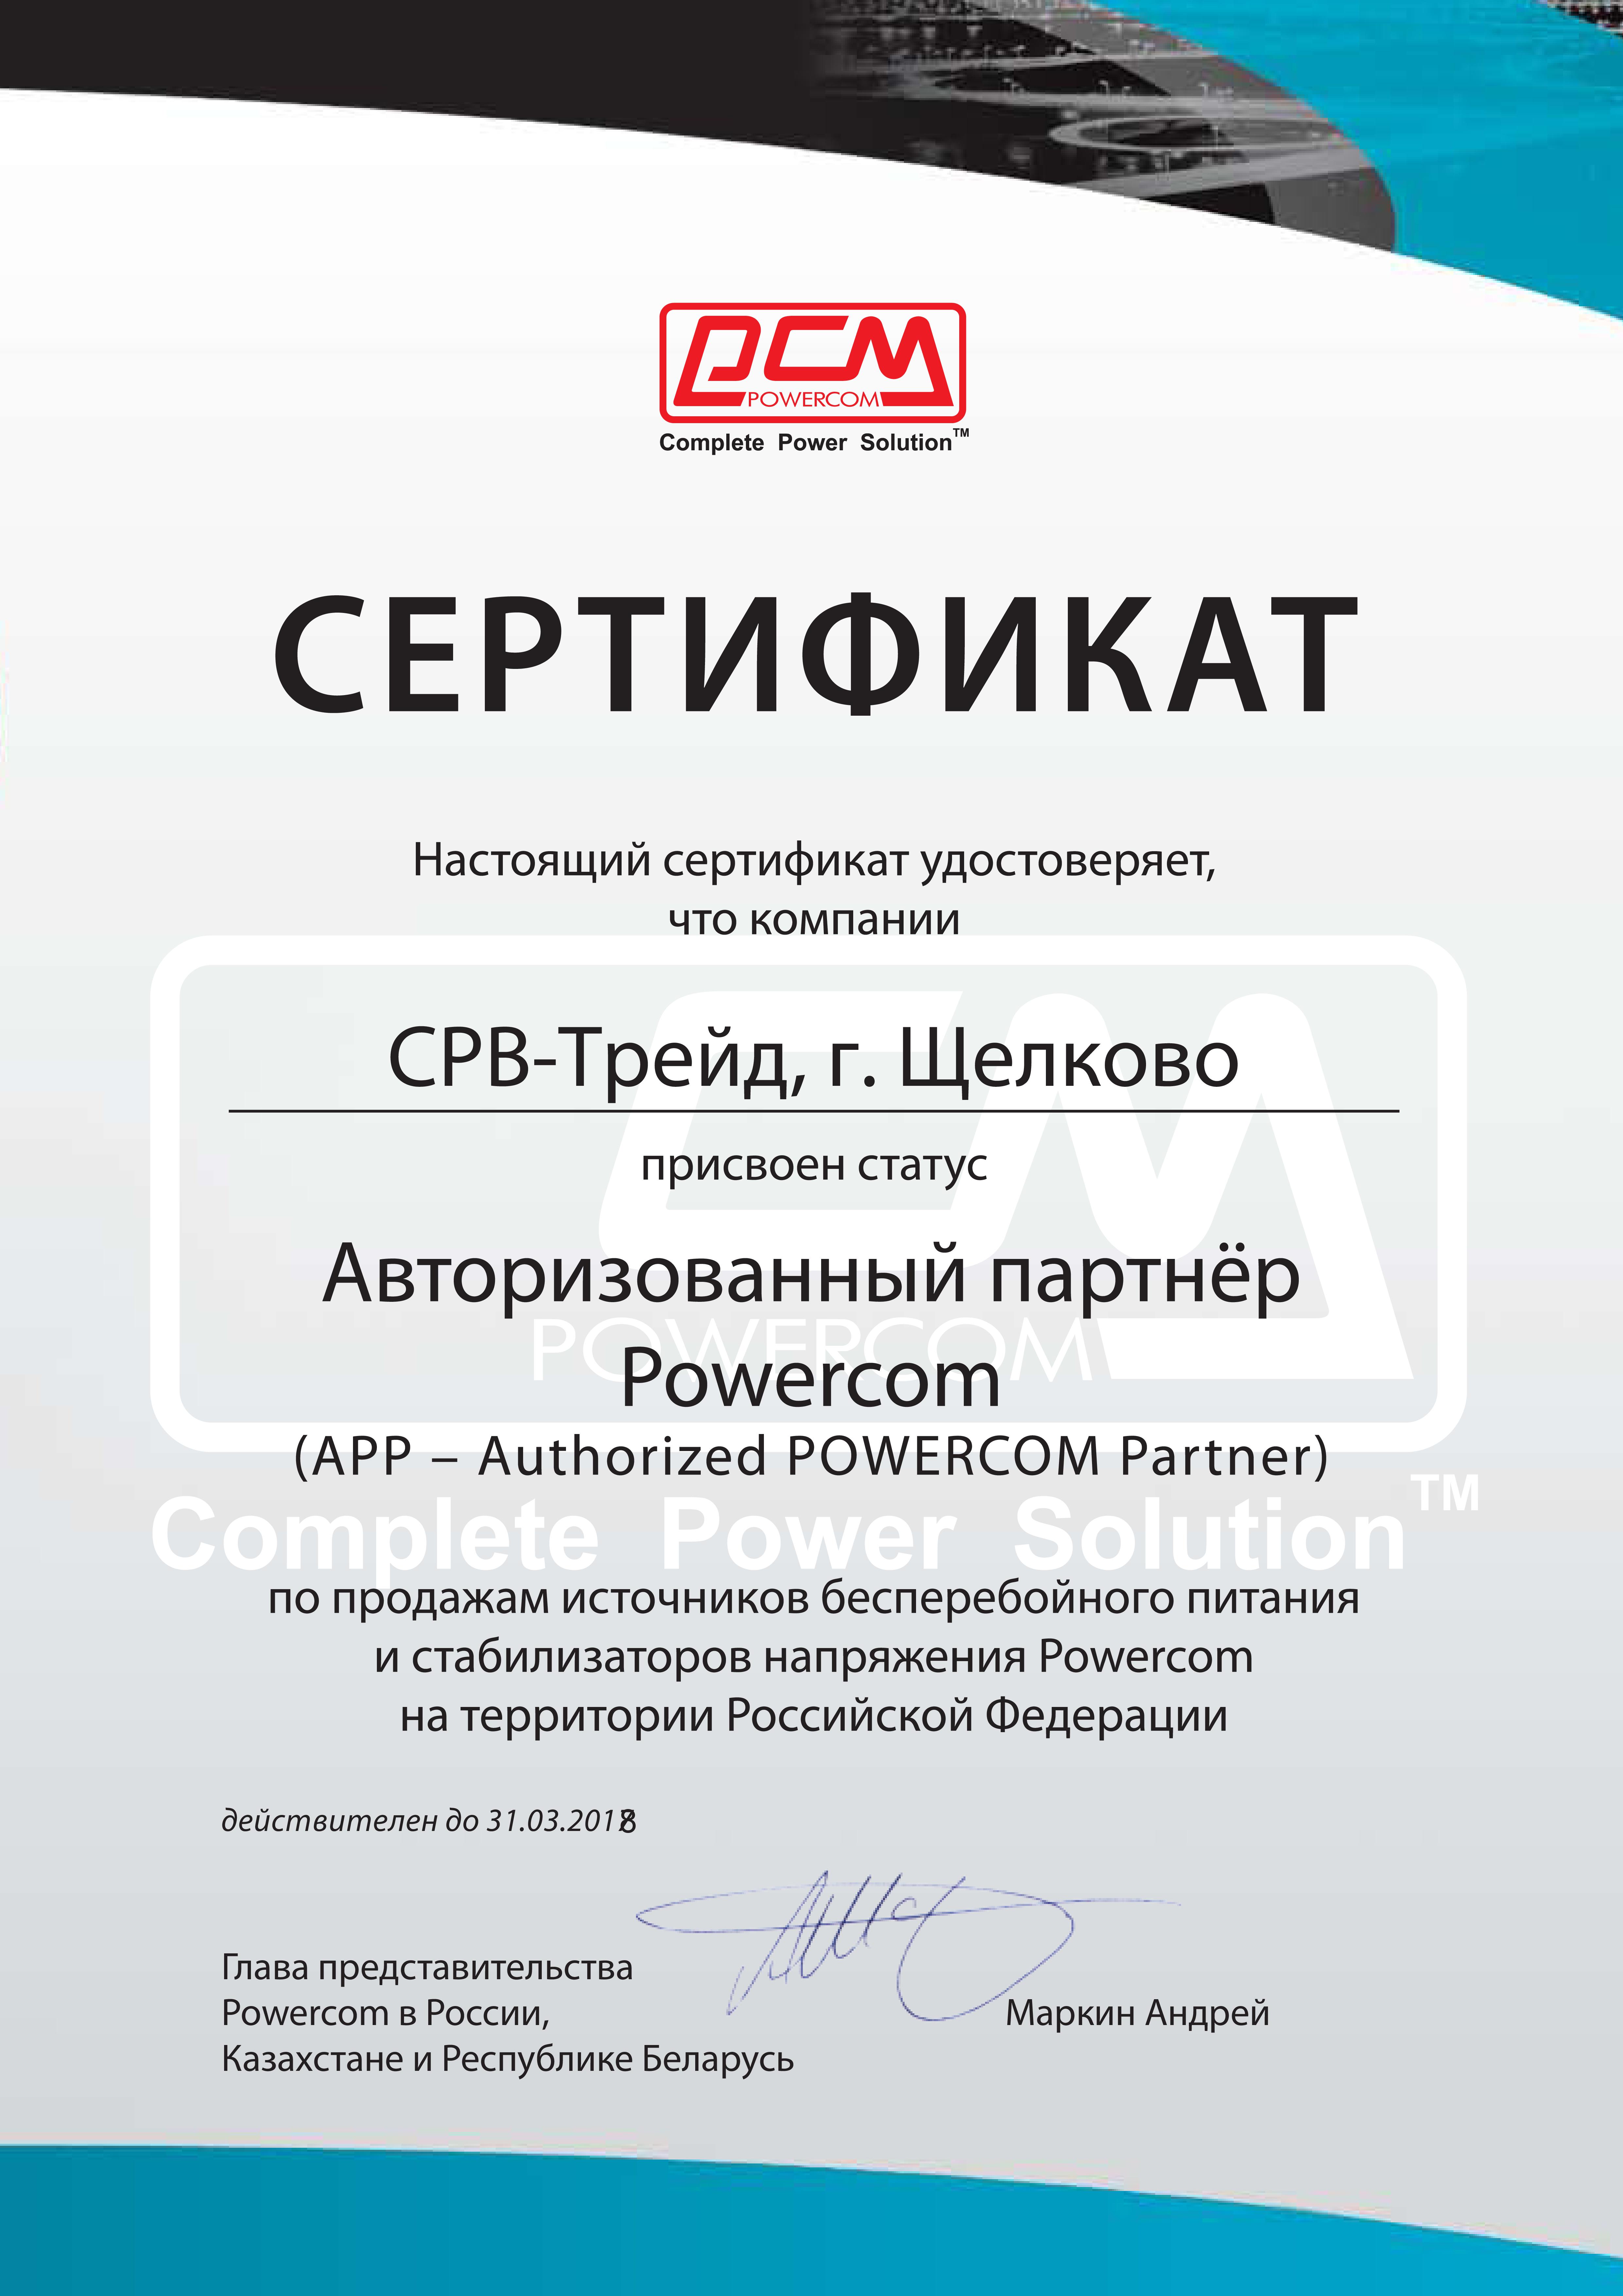 Сертификат SRV-TRADE как партнера Powercom